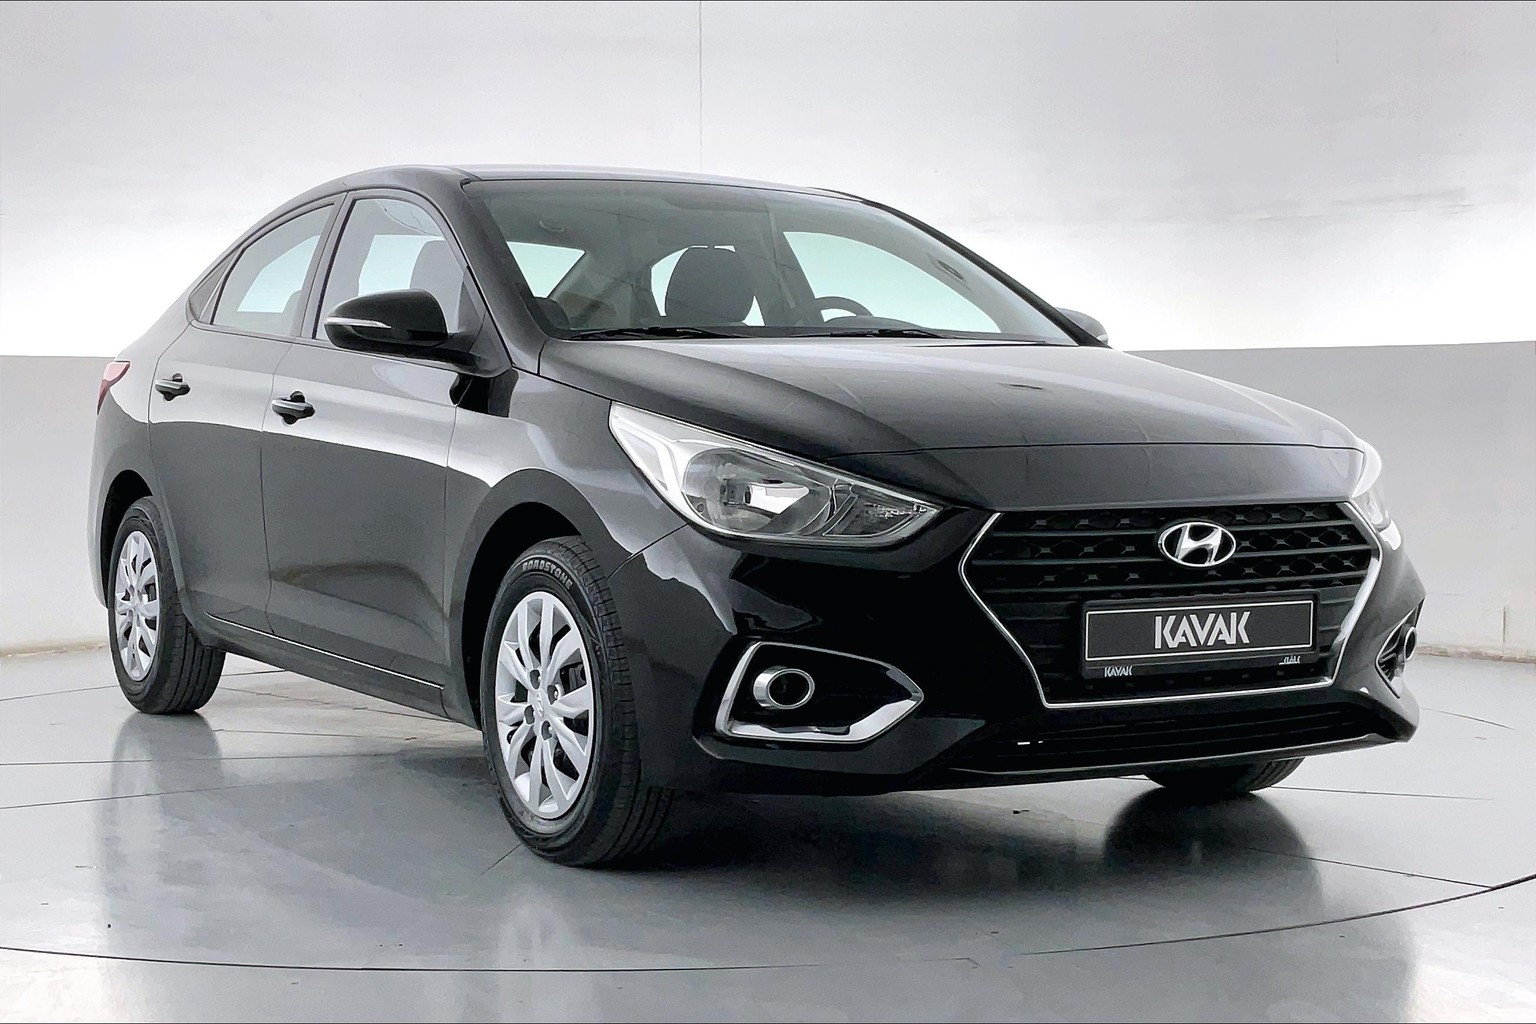 Hyundai Accent 2020